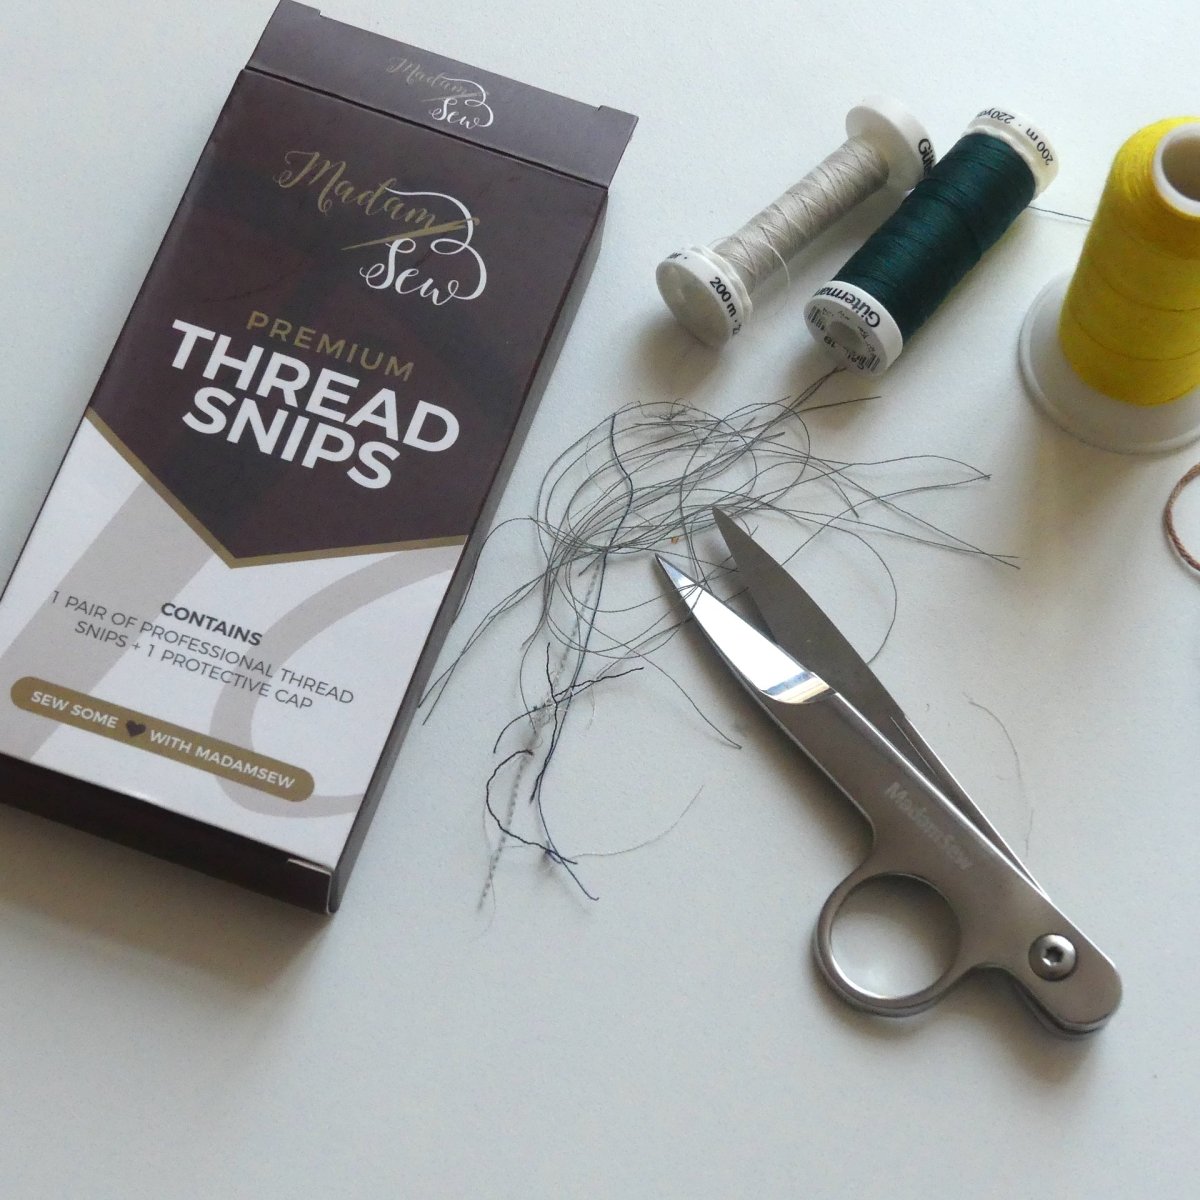 Scissors Sewing Threads, Thread Snip Scissors, Sewing Thread Cutter